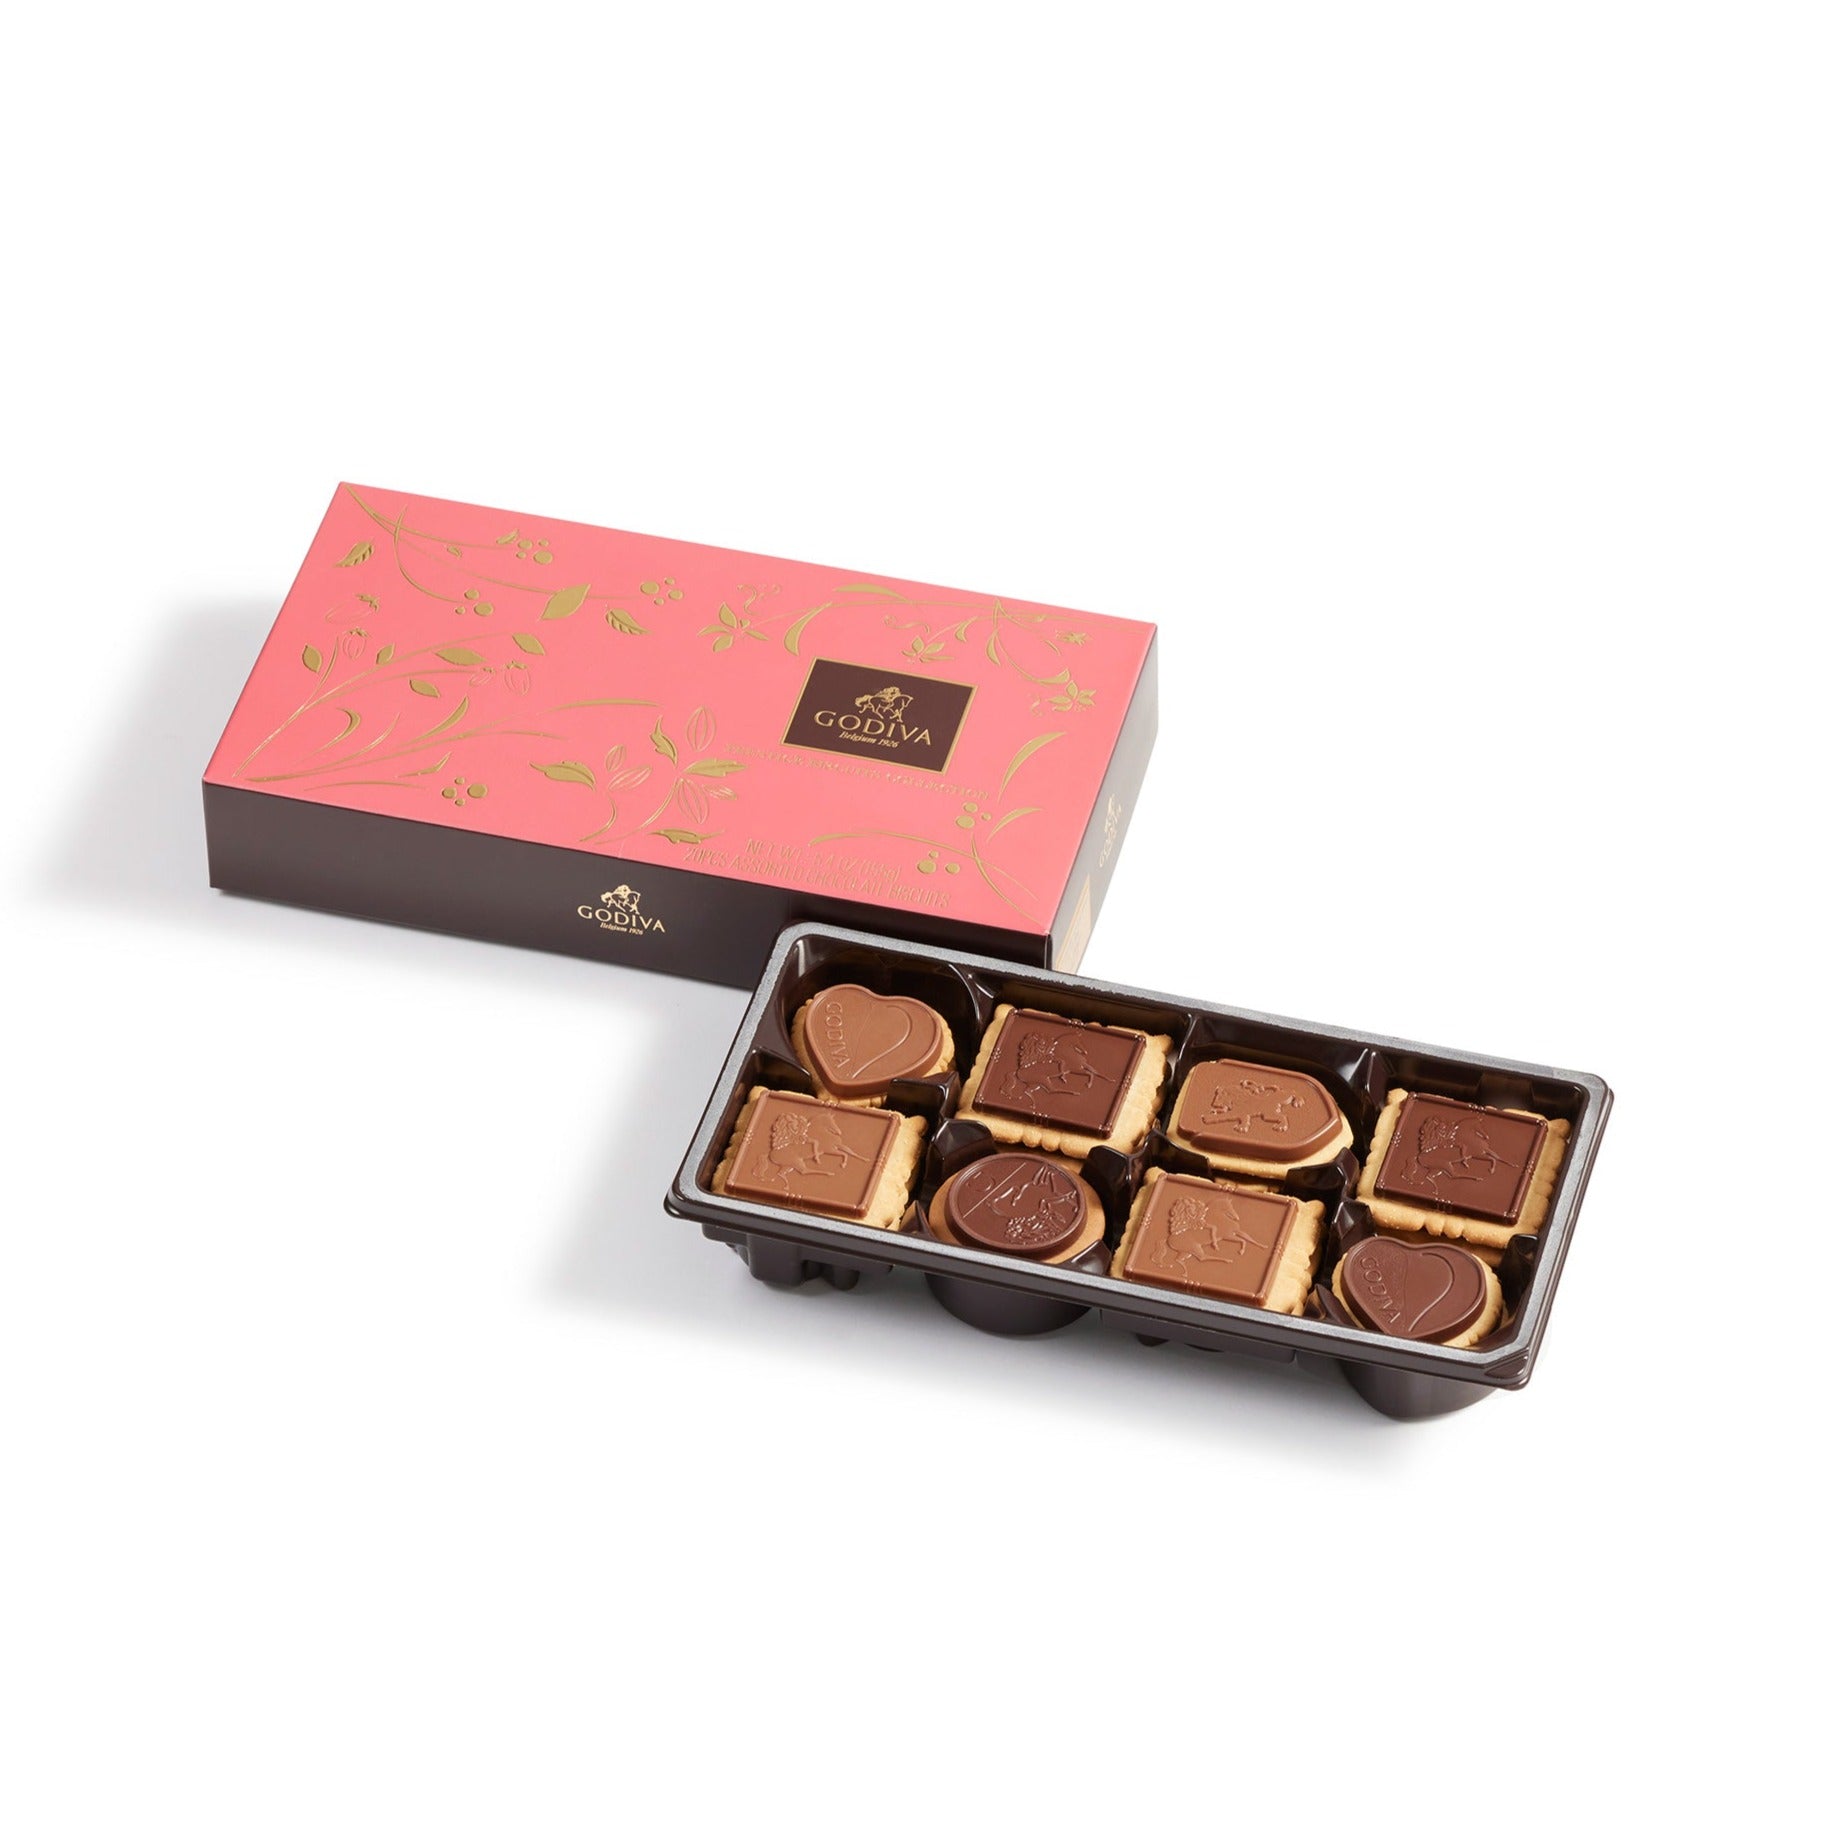 chocolate-biscuits-gift-box-20pc-1.jpg